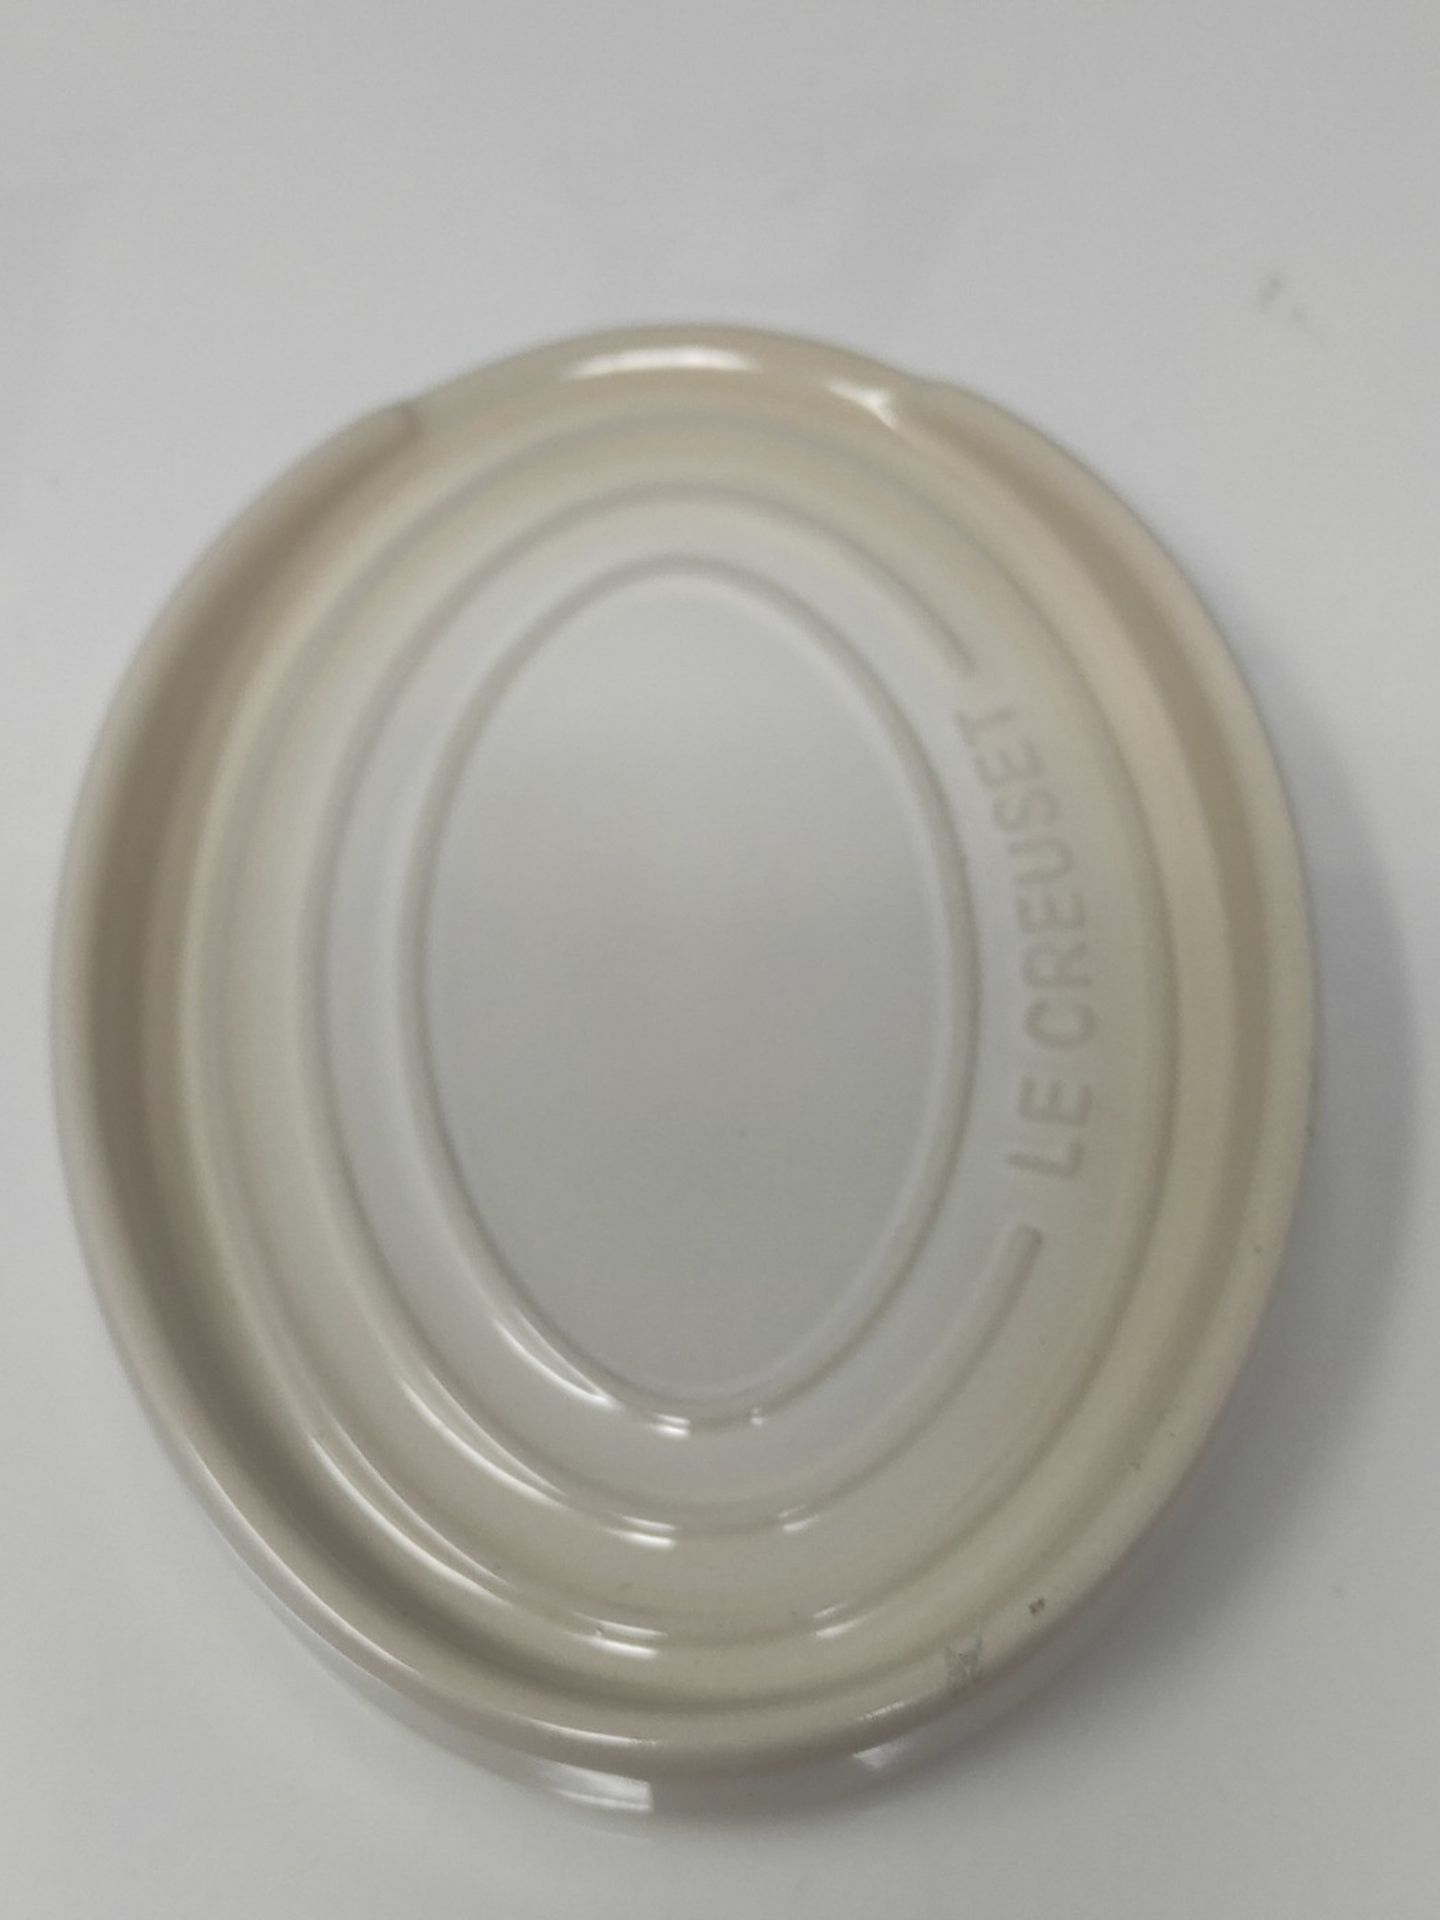 Le Creuset Stoneware Oval Spoon Rest Meringue - Image 2 of 2